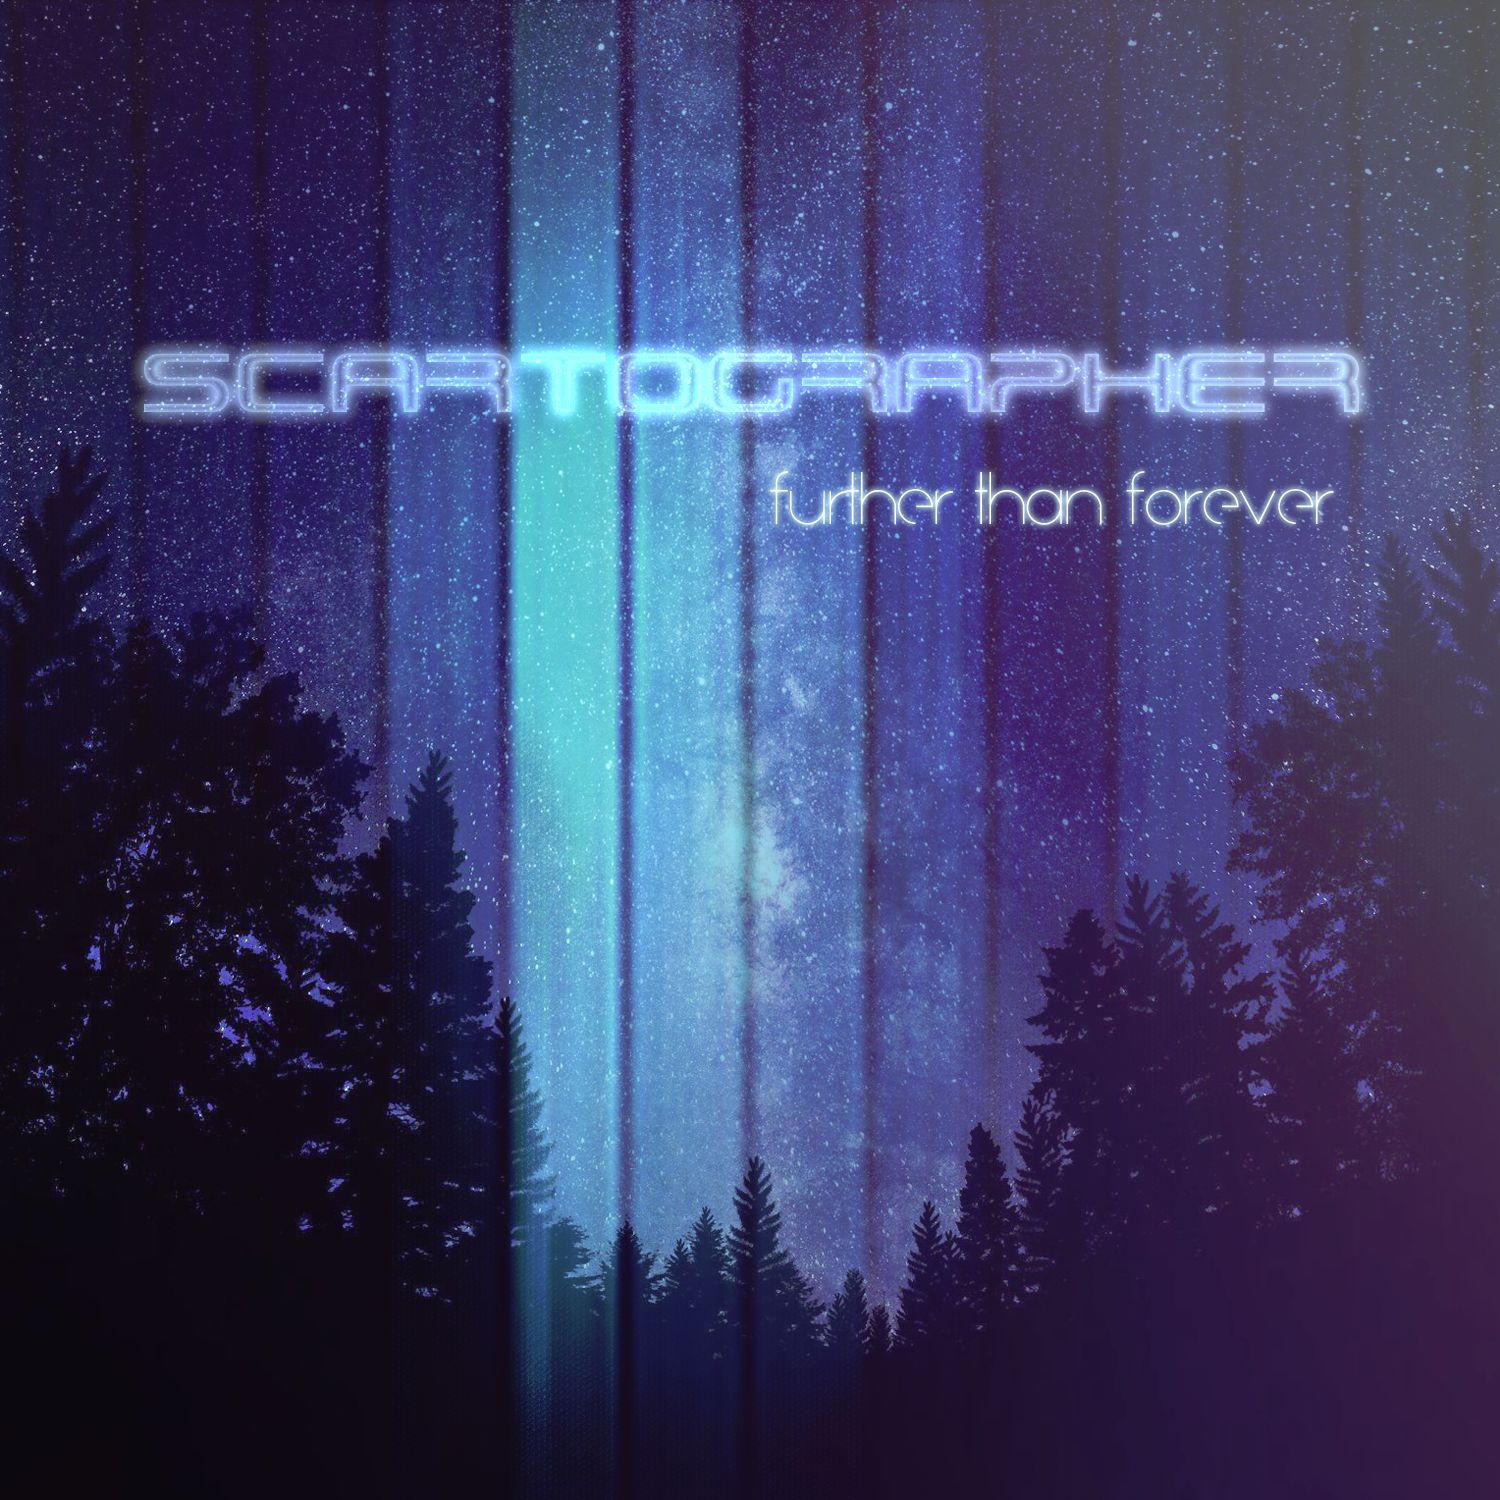 डाउनलोड Scartographer - Further Than Forever